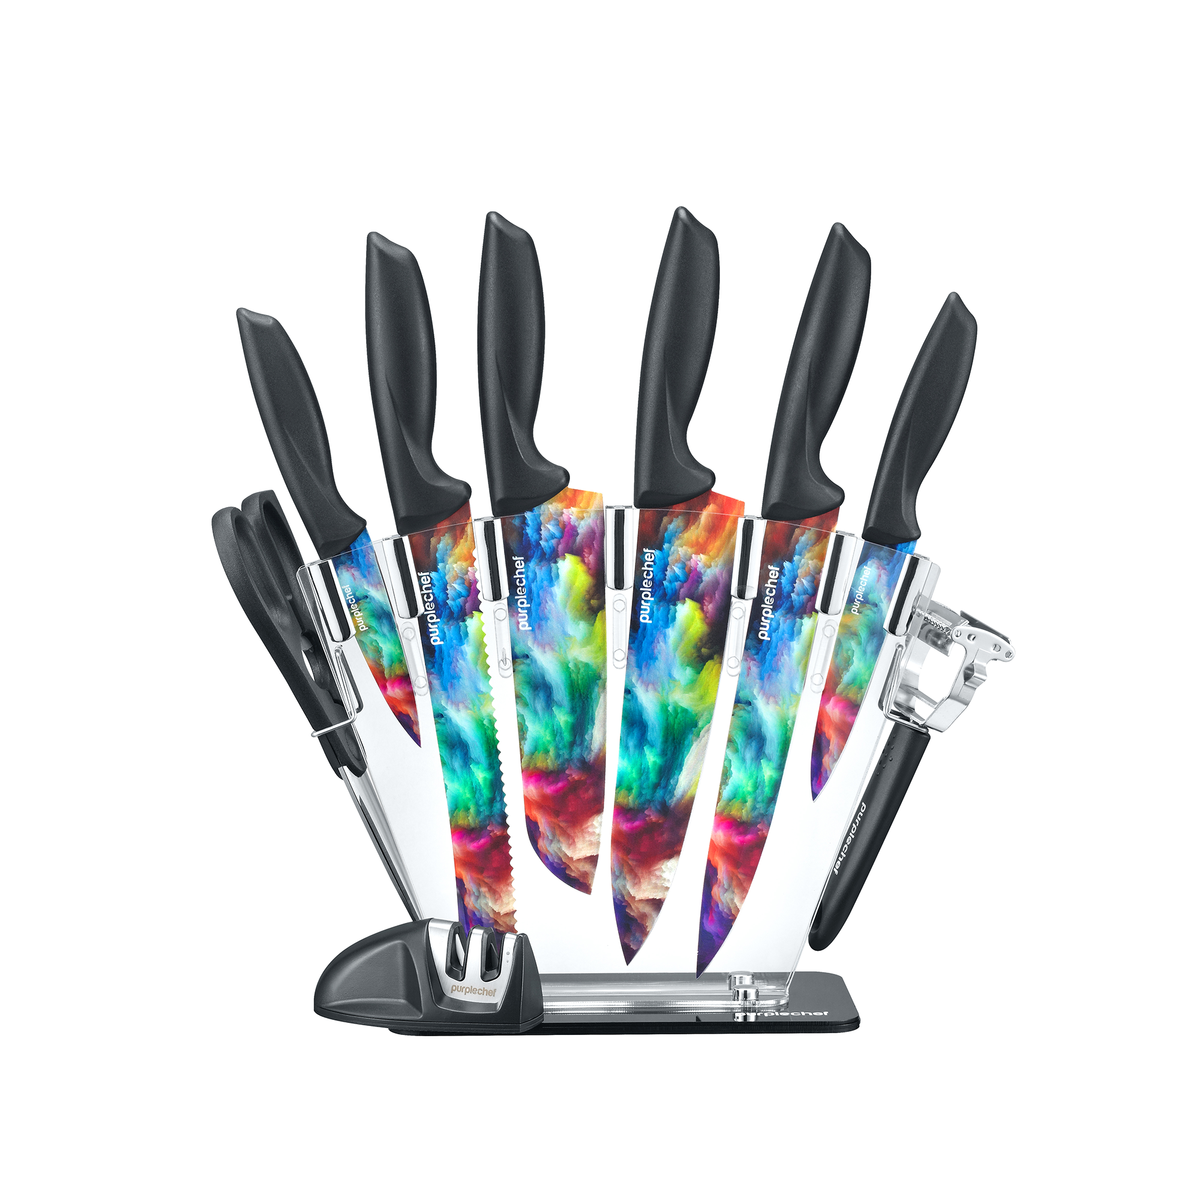 Cosmos Galaxy Kitchen Knife Set –